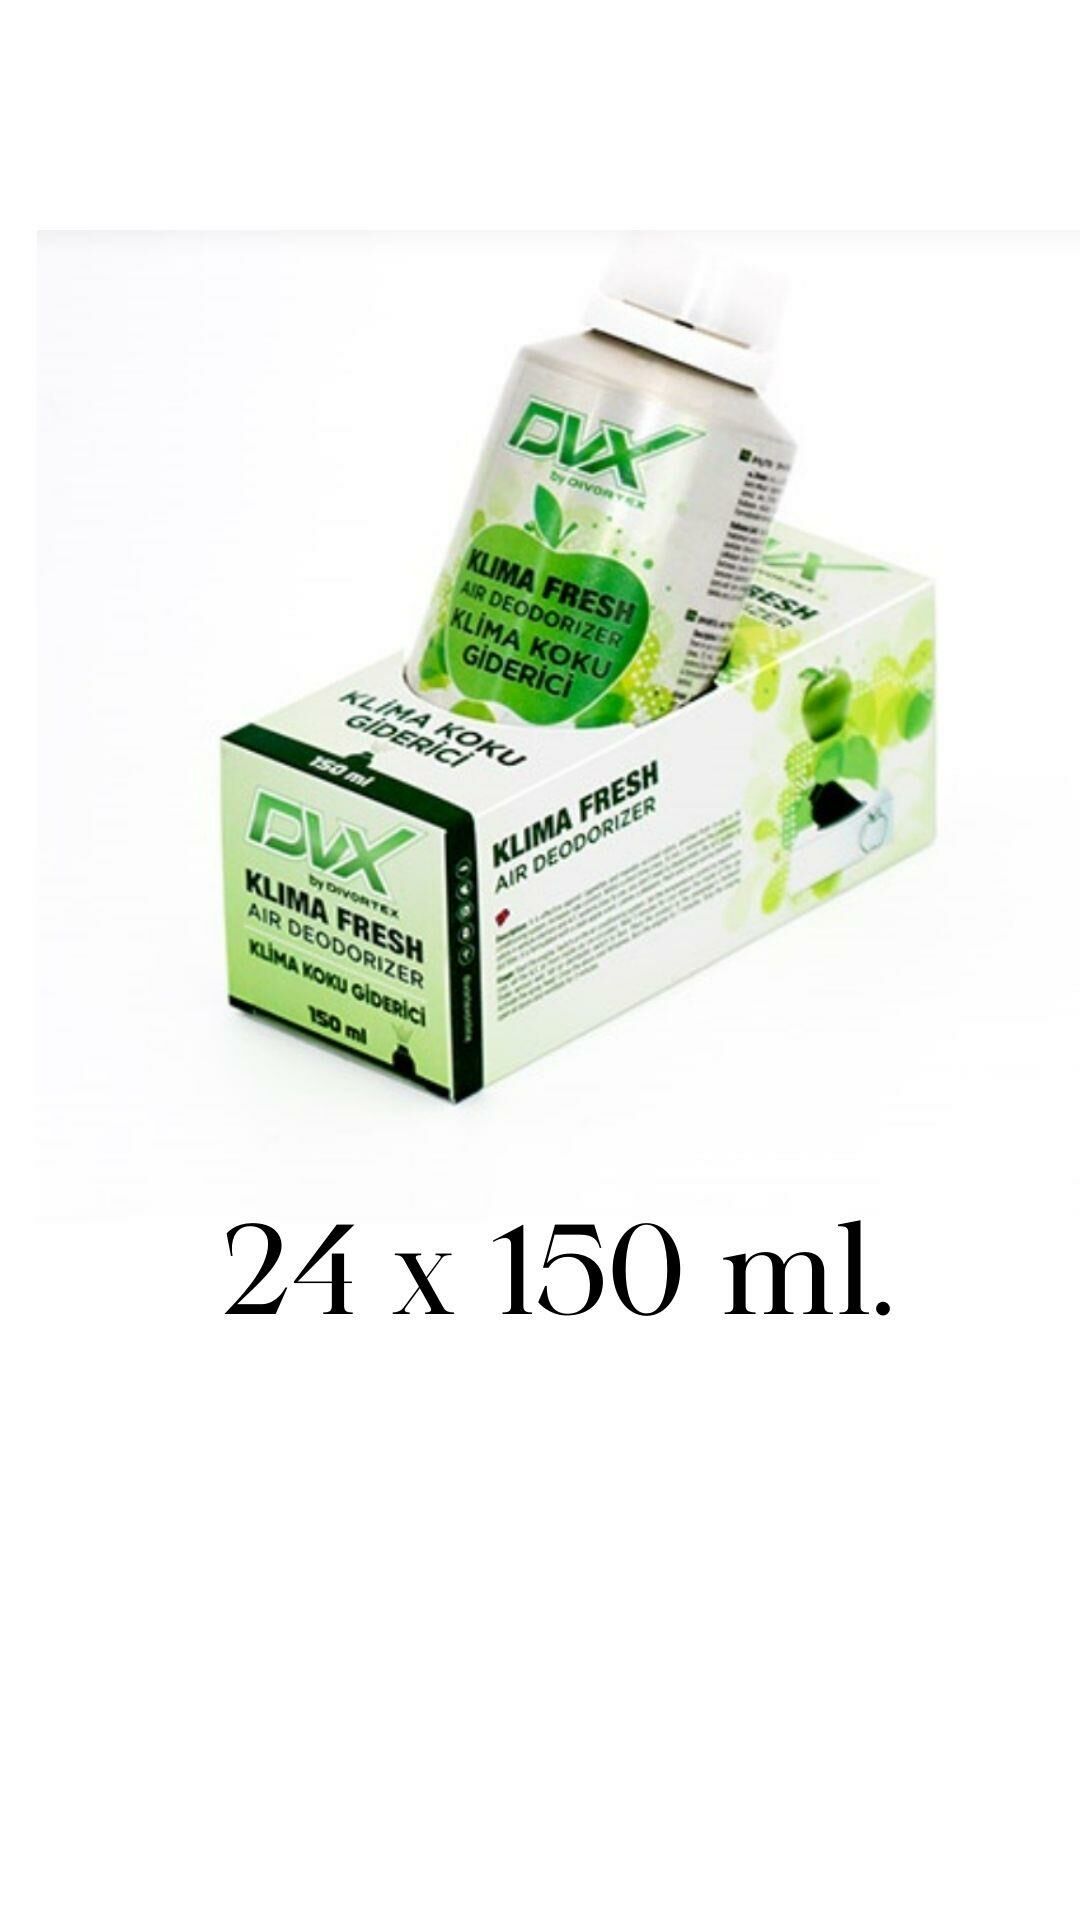 Divortex Klima Fresh  (Klima Bombası) Yeşil Elma 24 x 150 ml